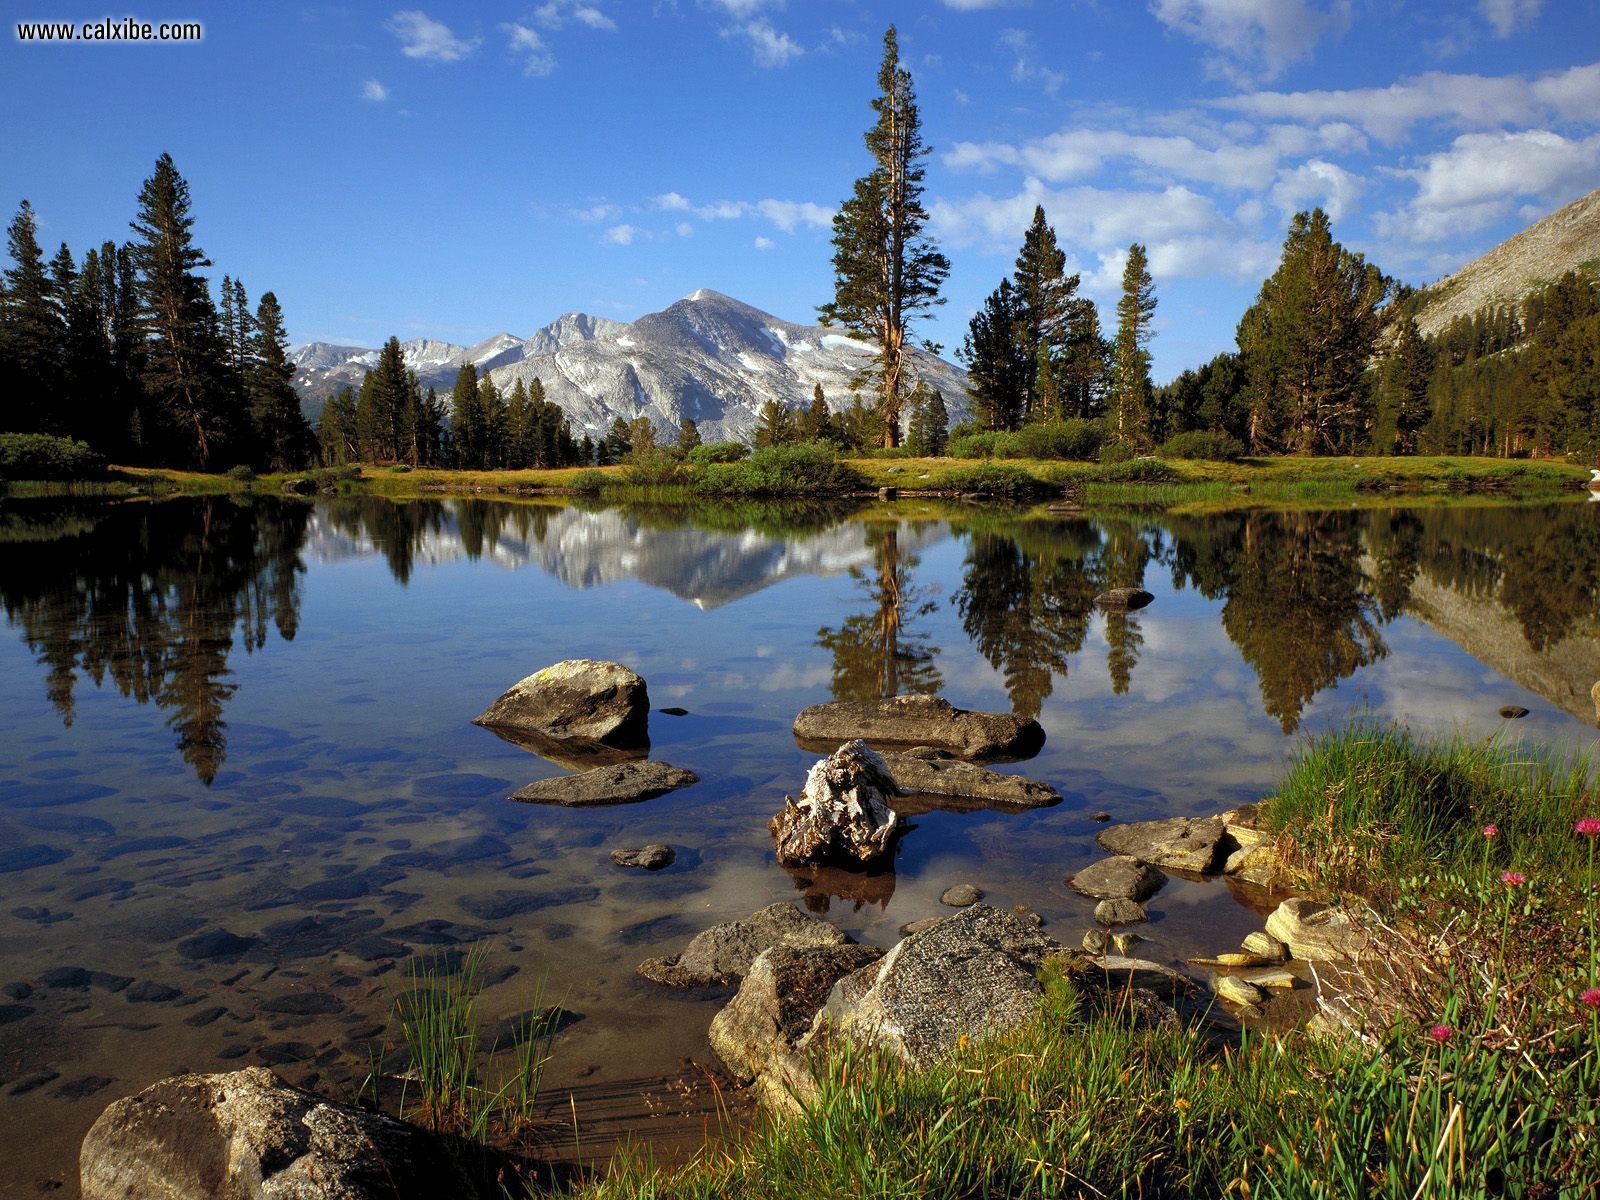 Wallpapers Parks Yosemite National Park Nature Image #228551 Download